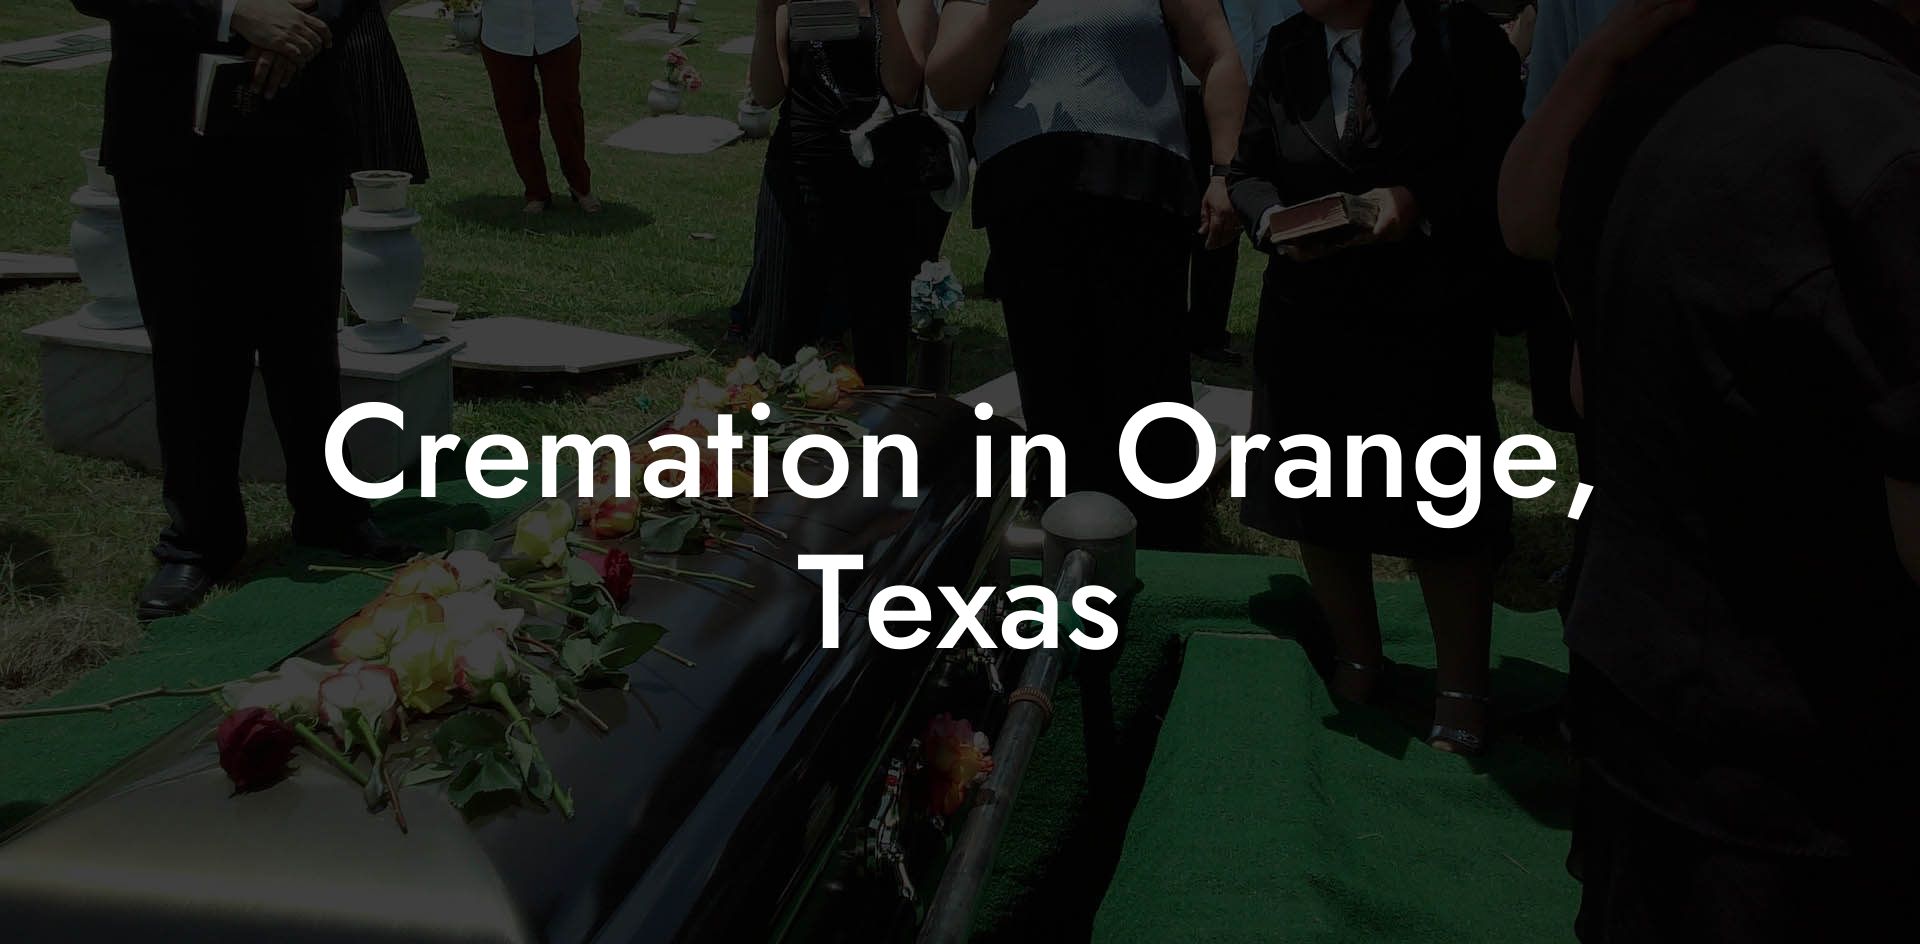 Cremation in Orange, Texas